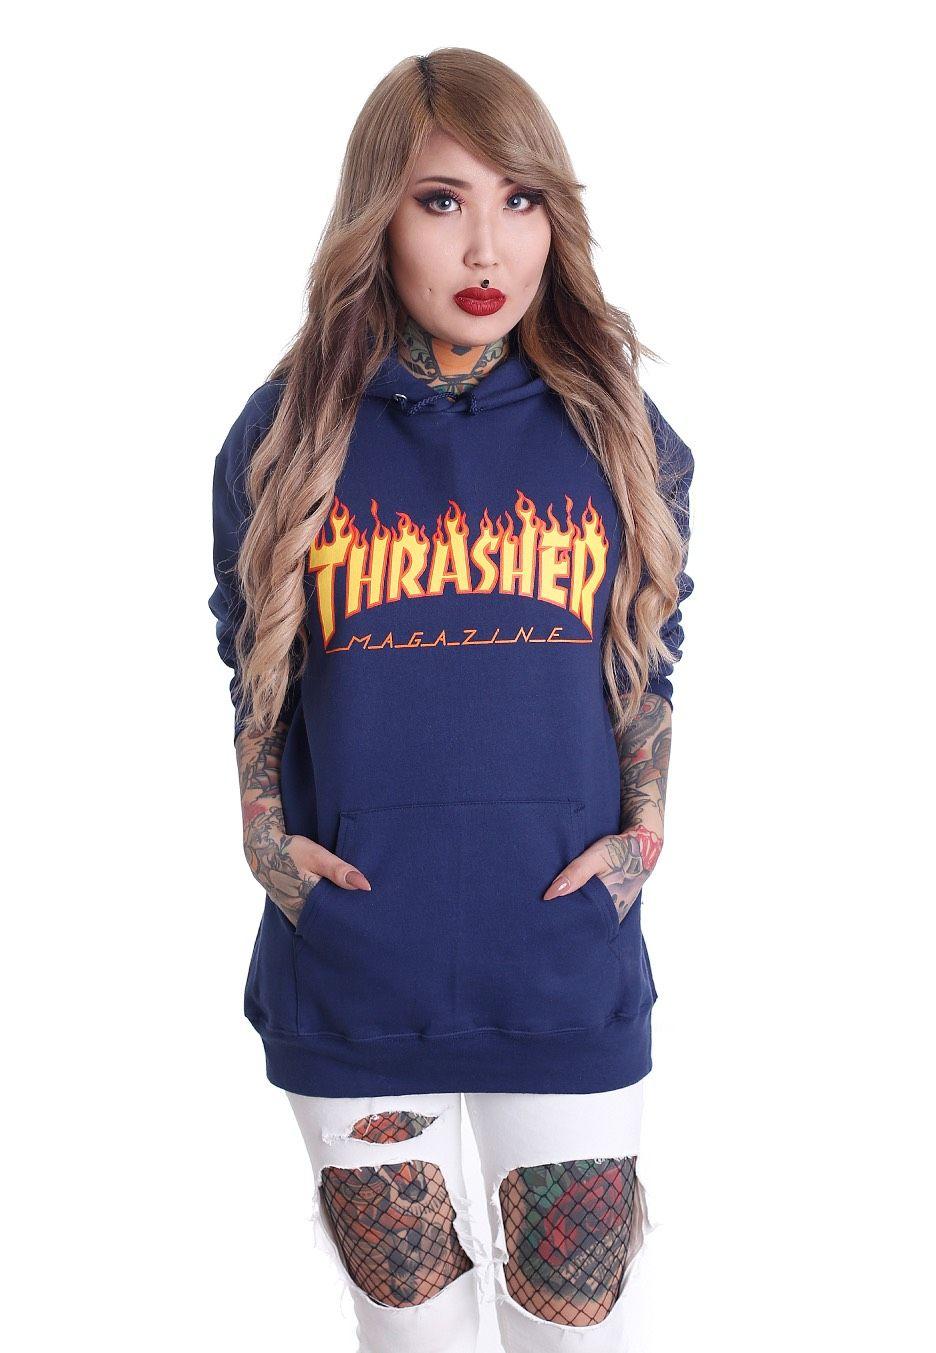 Girl Thrasher Logo - Thrasher - Thrasher Flame Navy - Hoodie - Streetwear Shop ...